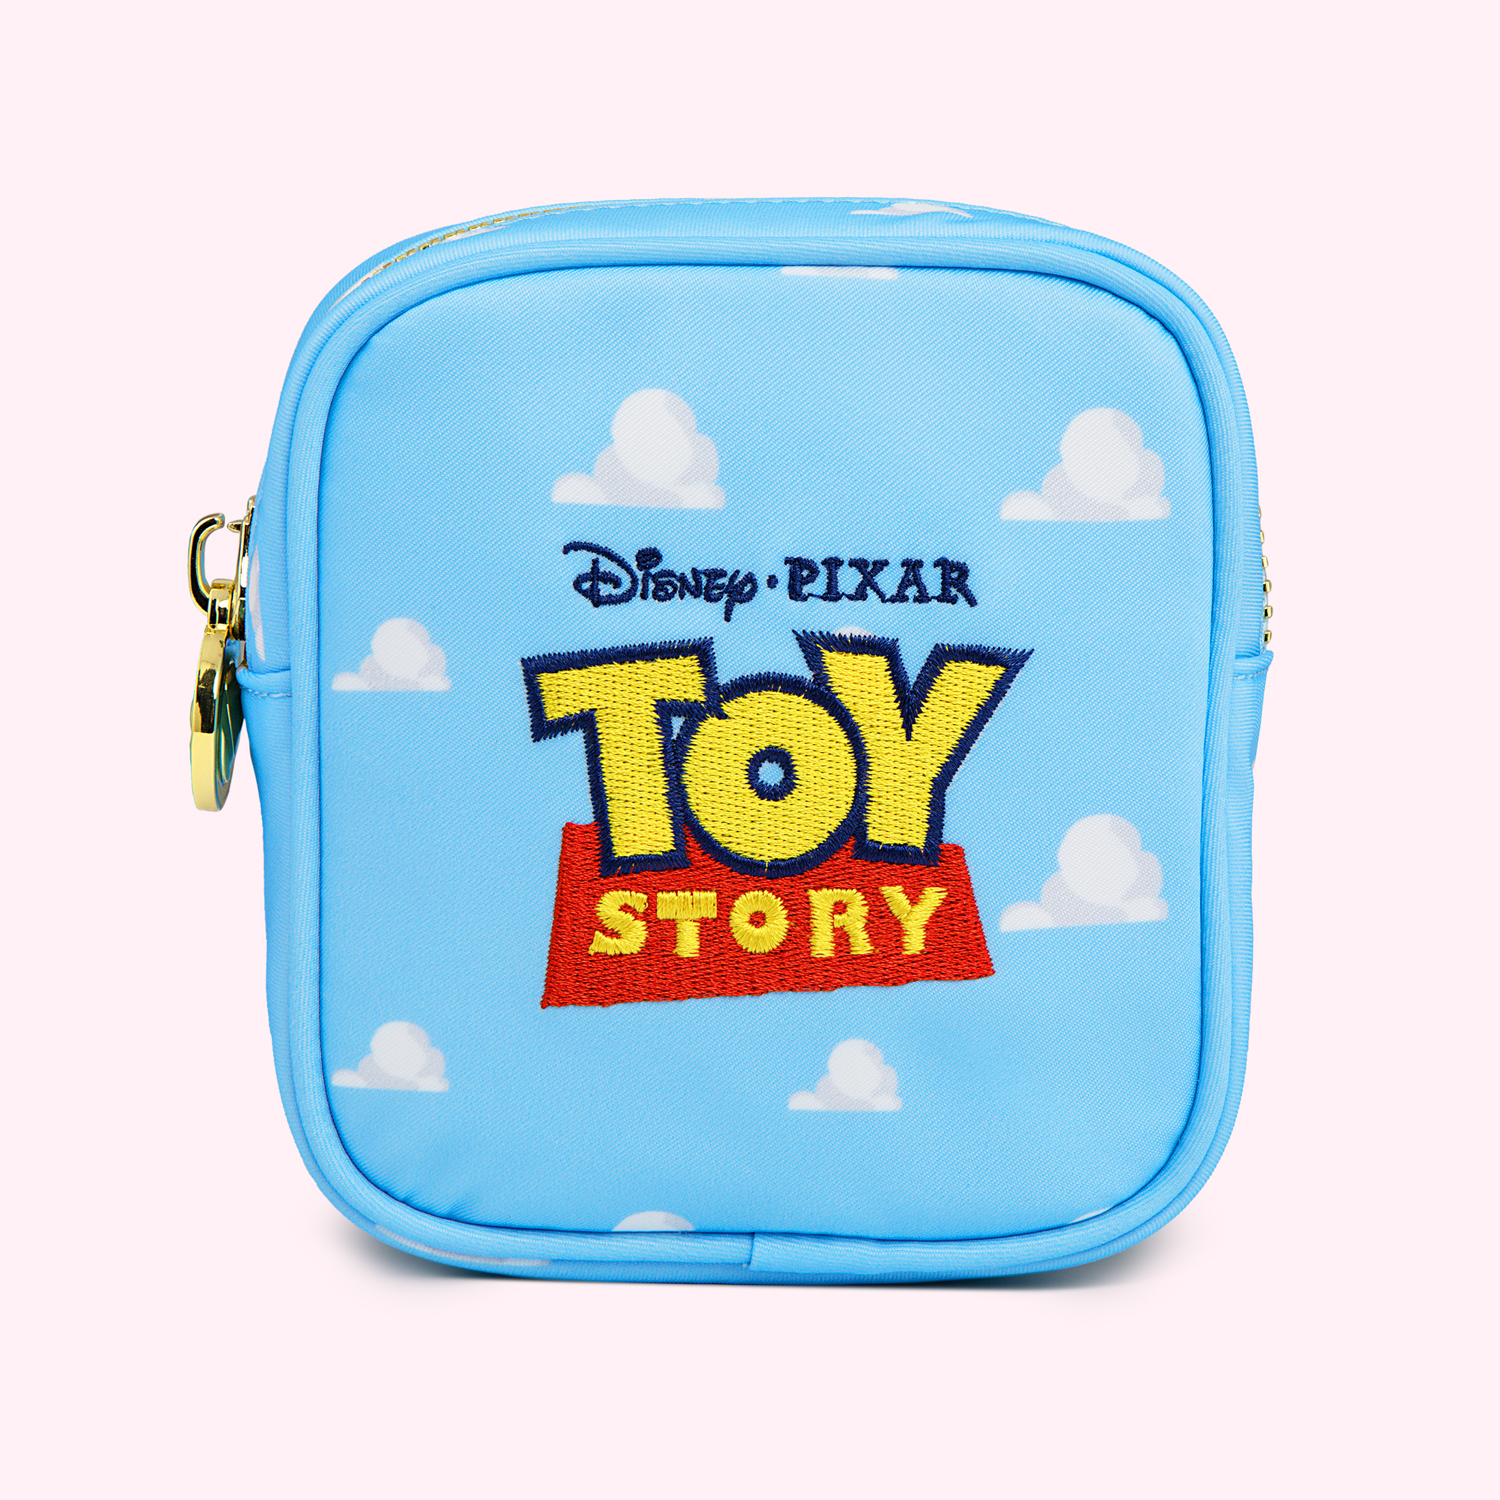 Disney & Pixar's Toy Story Mini Pouch